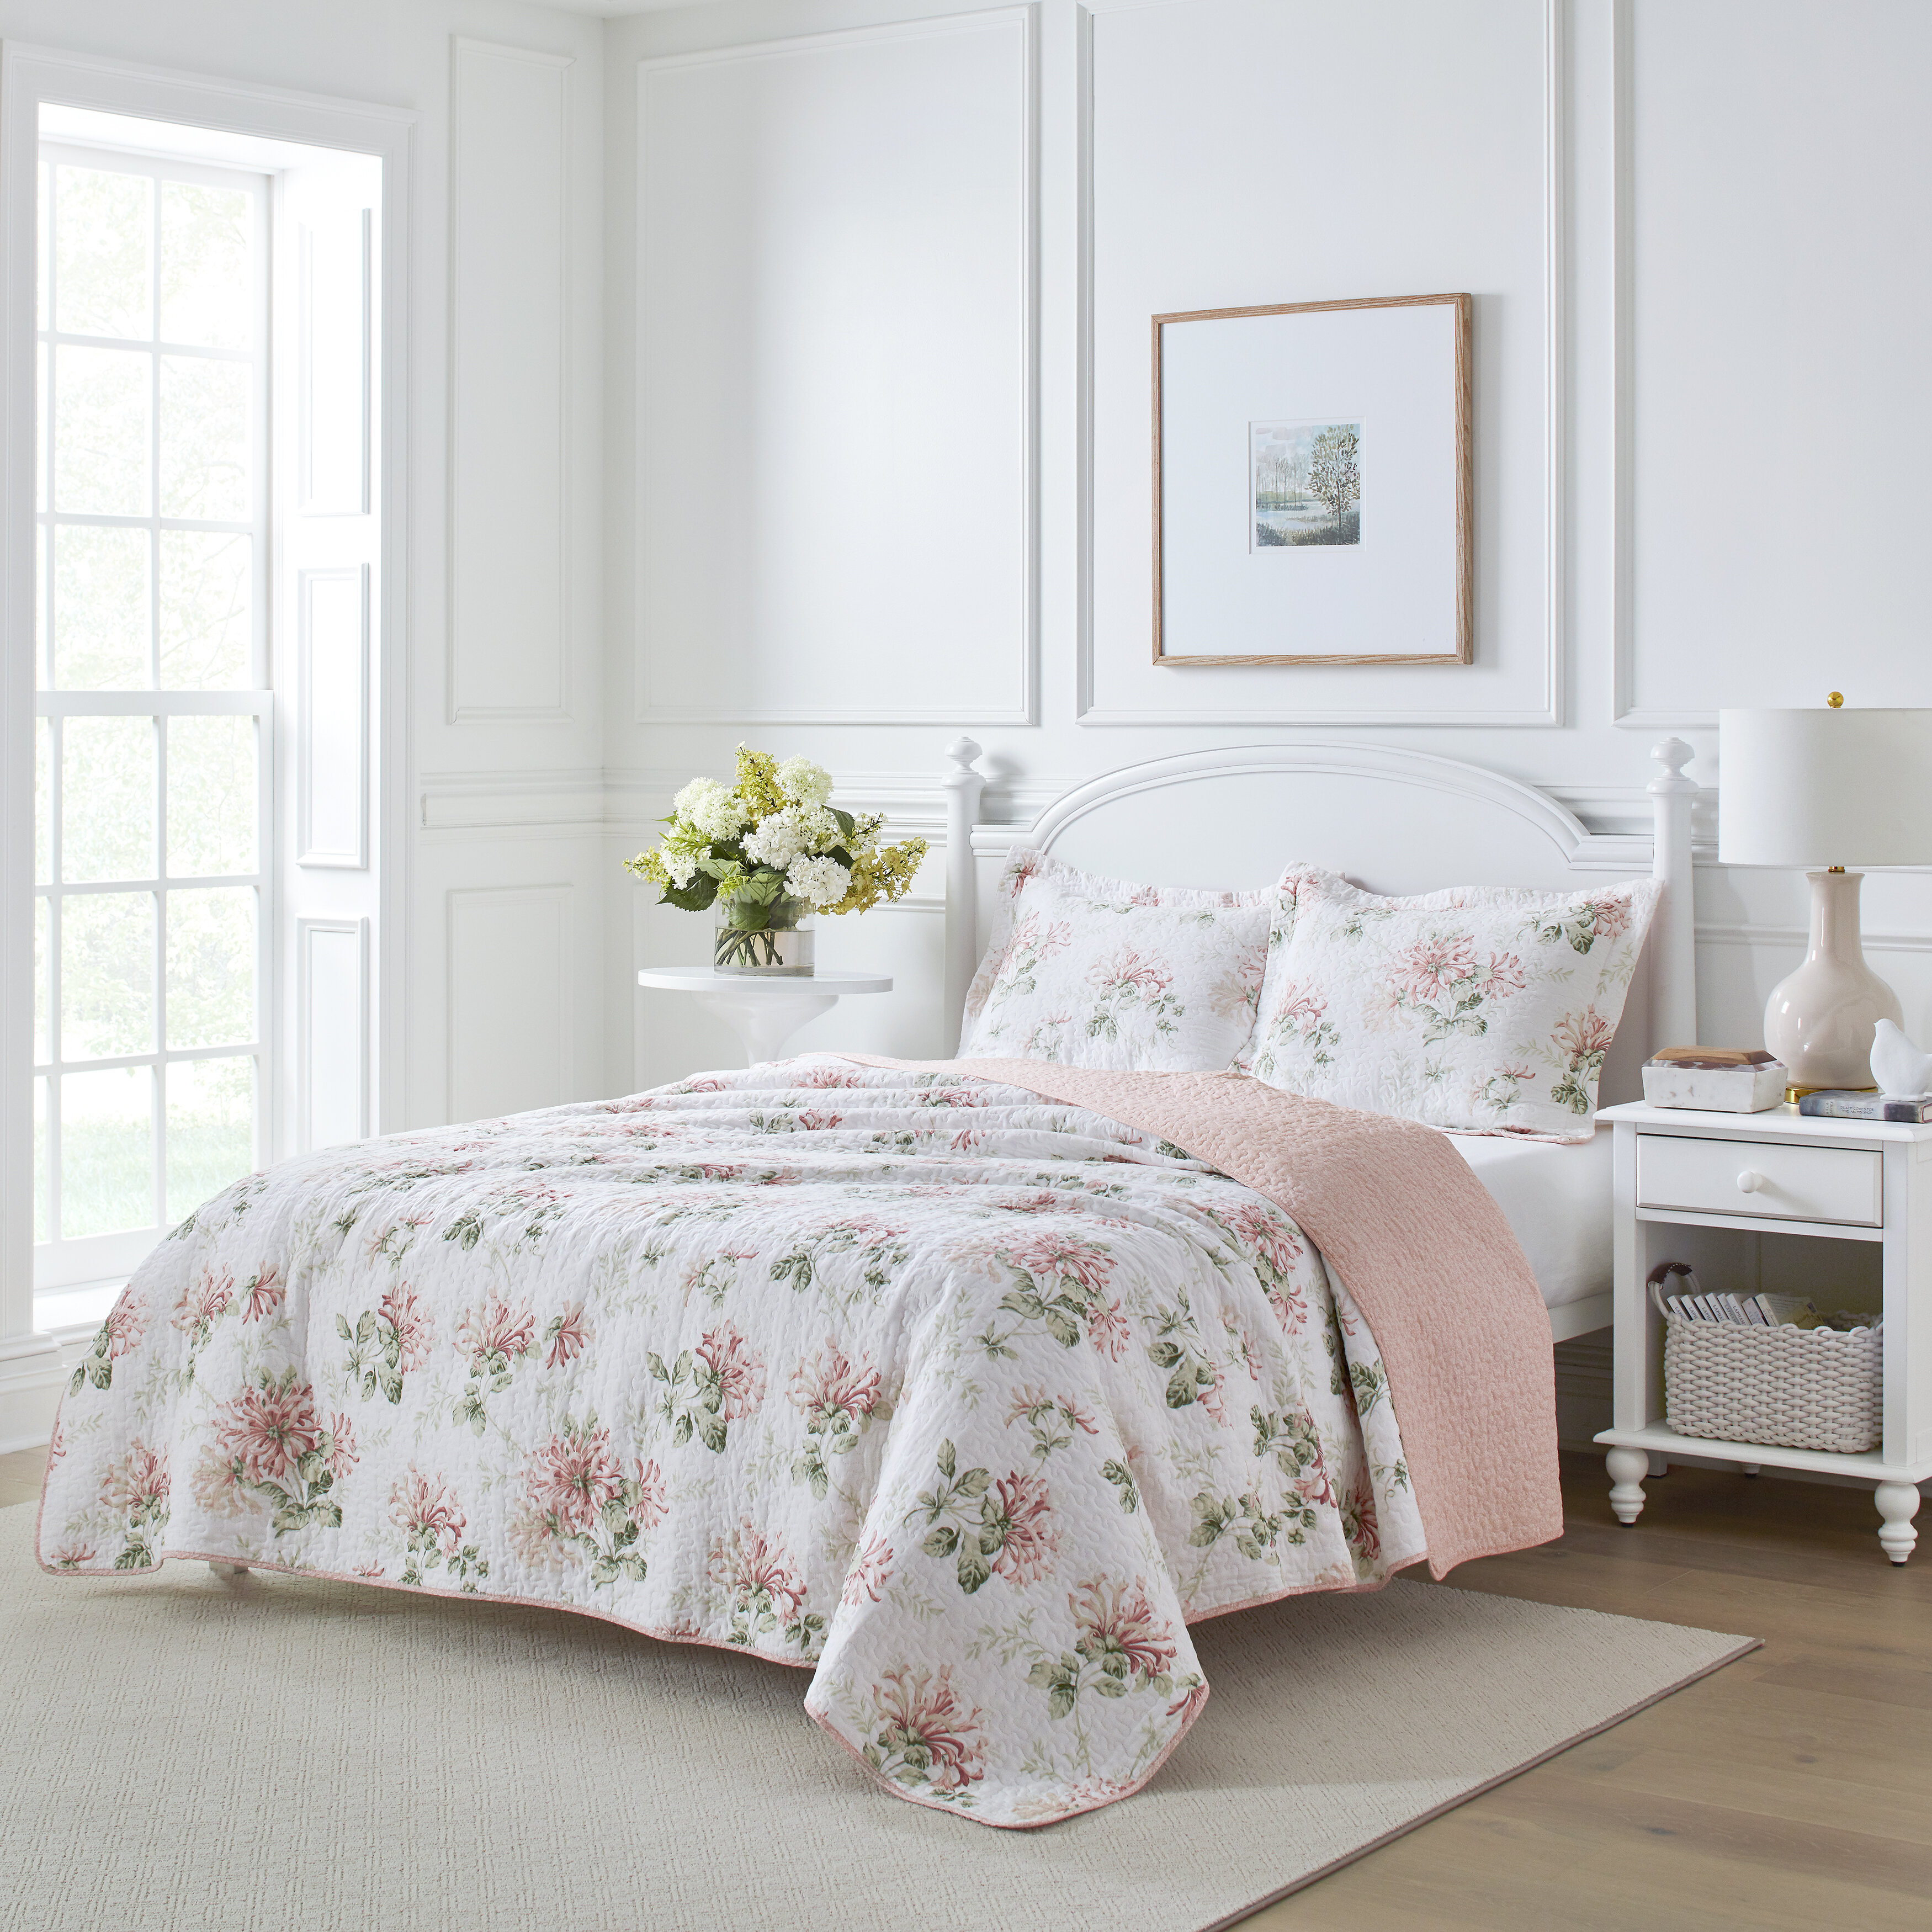 Laura Ashley Ailyn Floral 100% Cotton Bonus Comforter Set includes Shams  and Decorative Pillows & Reviews